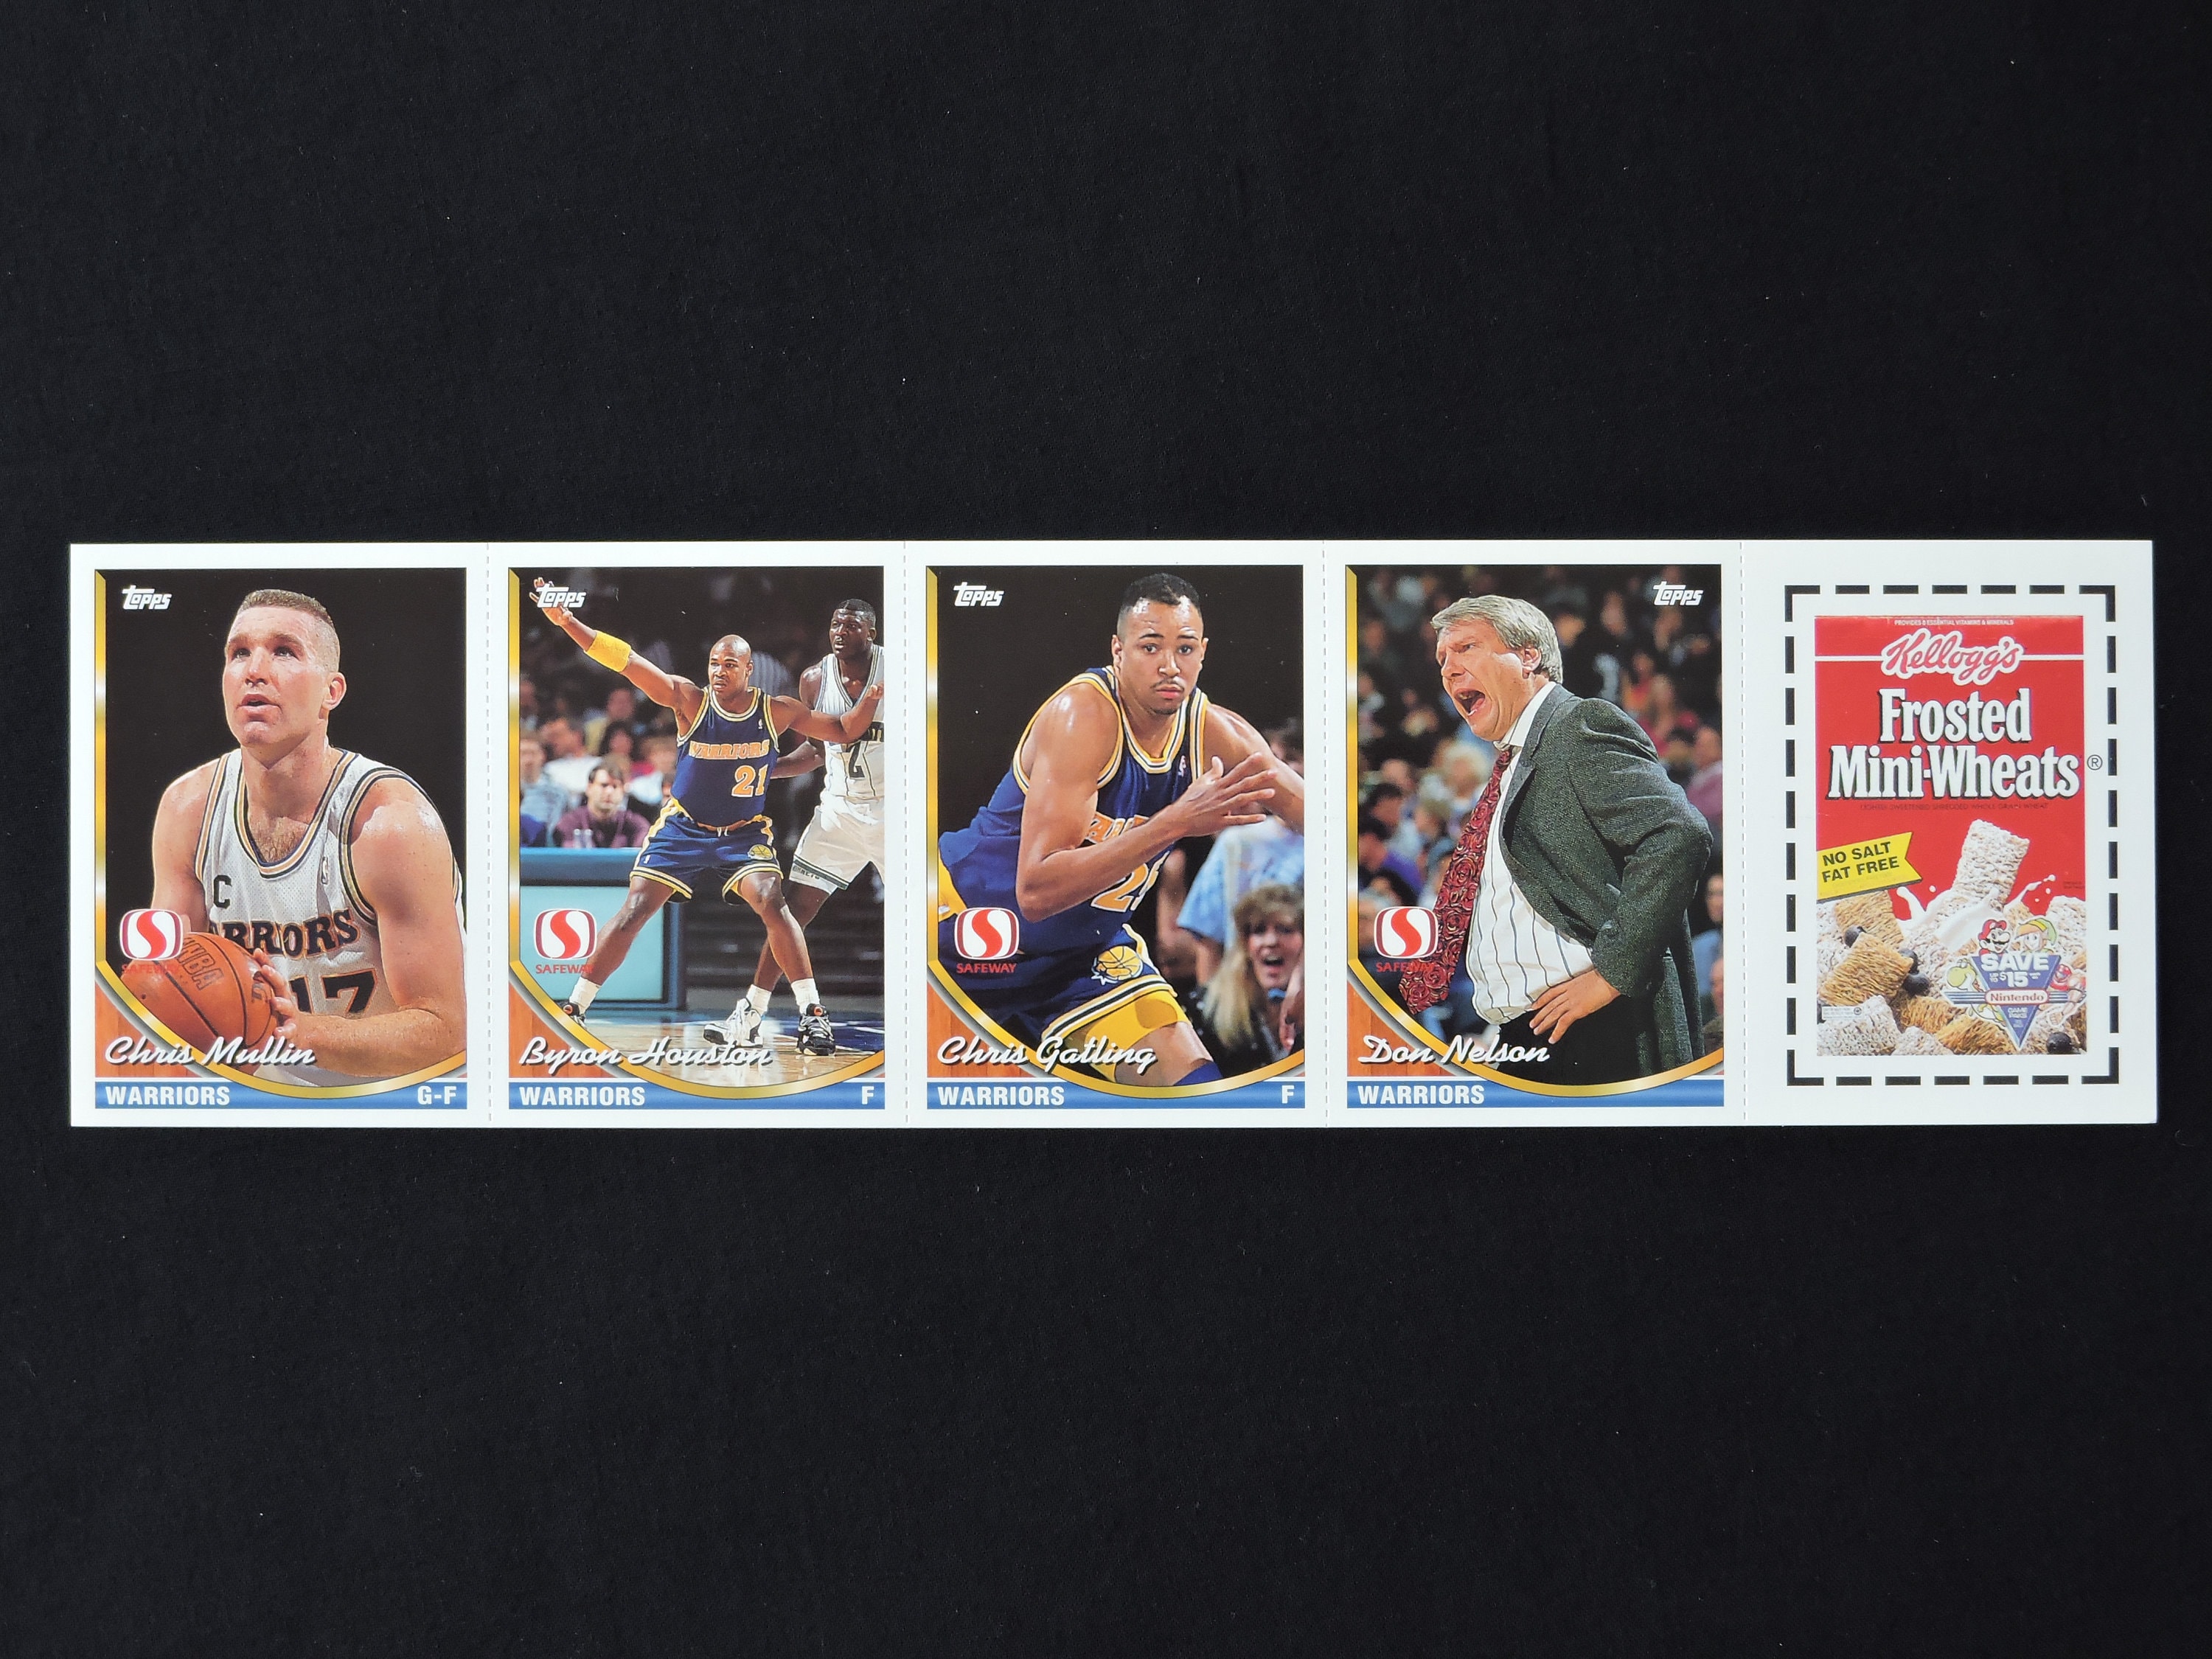 Sarunas Marciulionis - Golden State Warriors (NBA Basketball Card